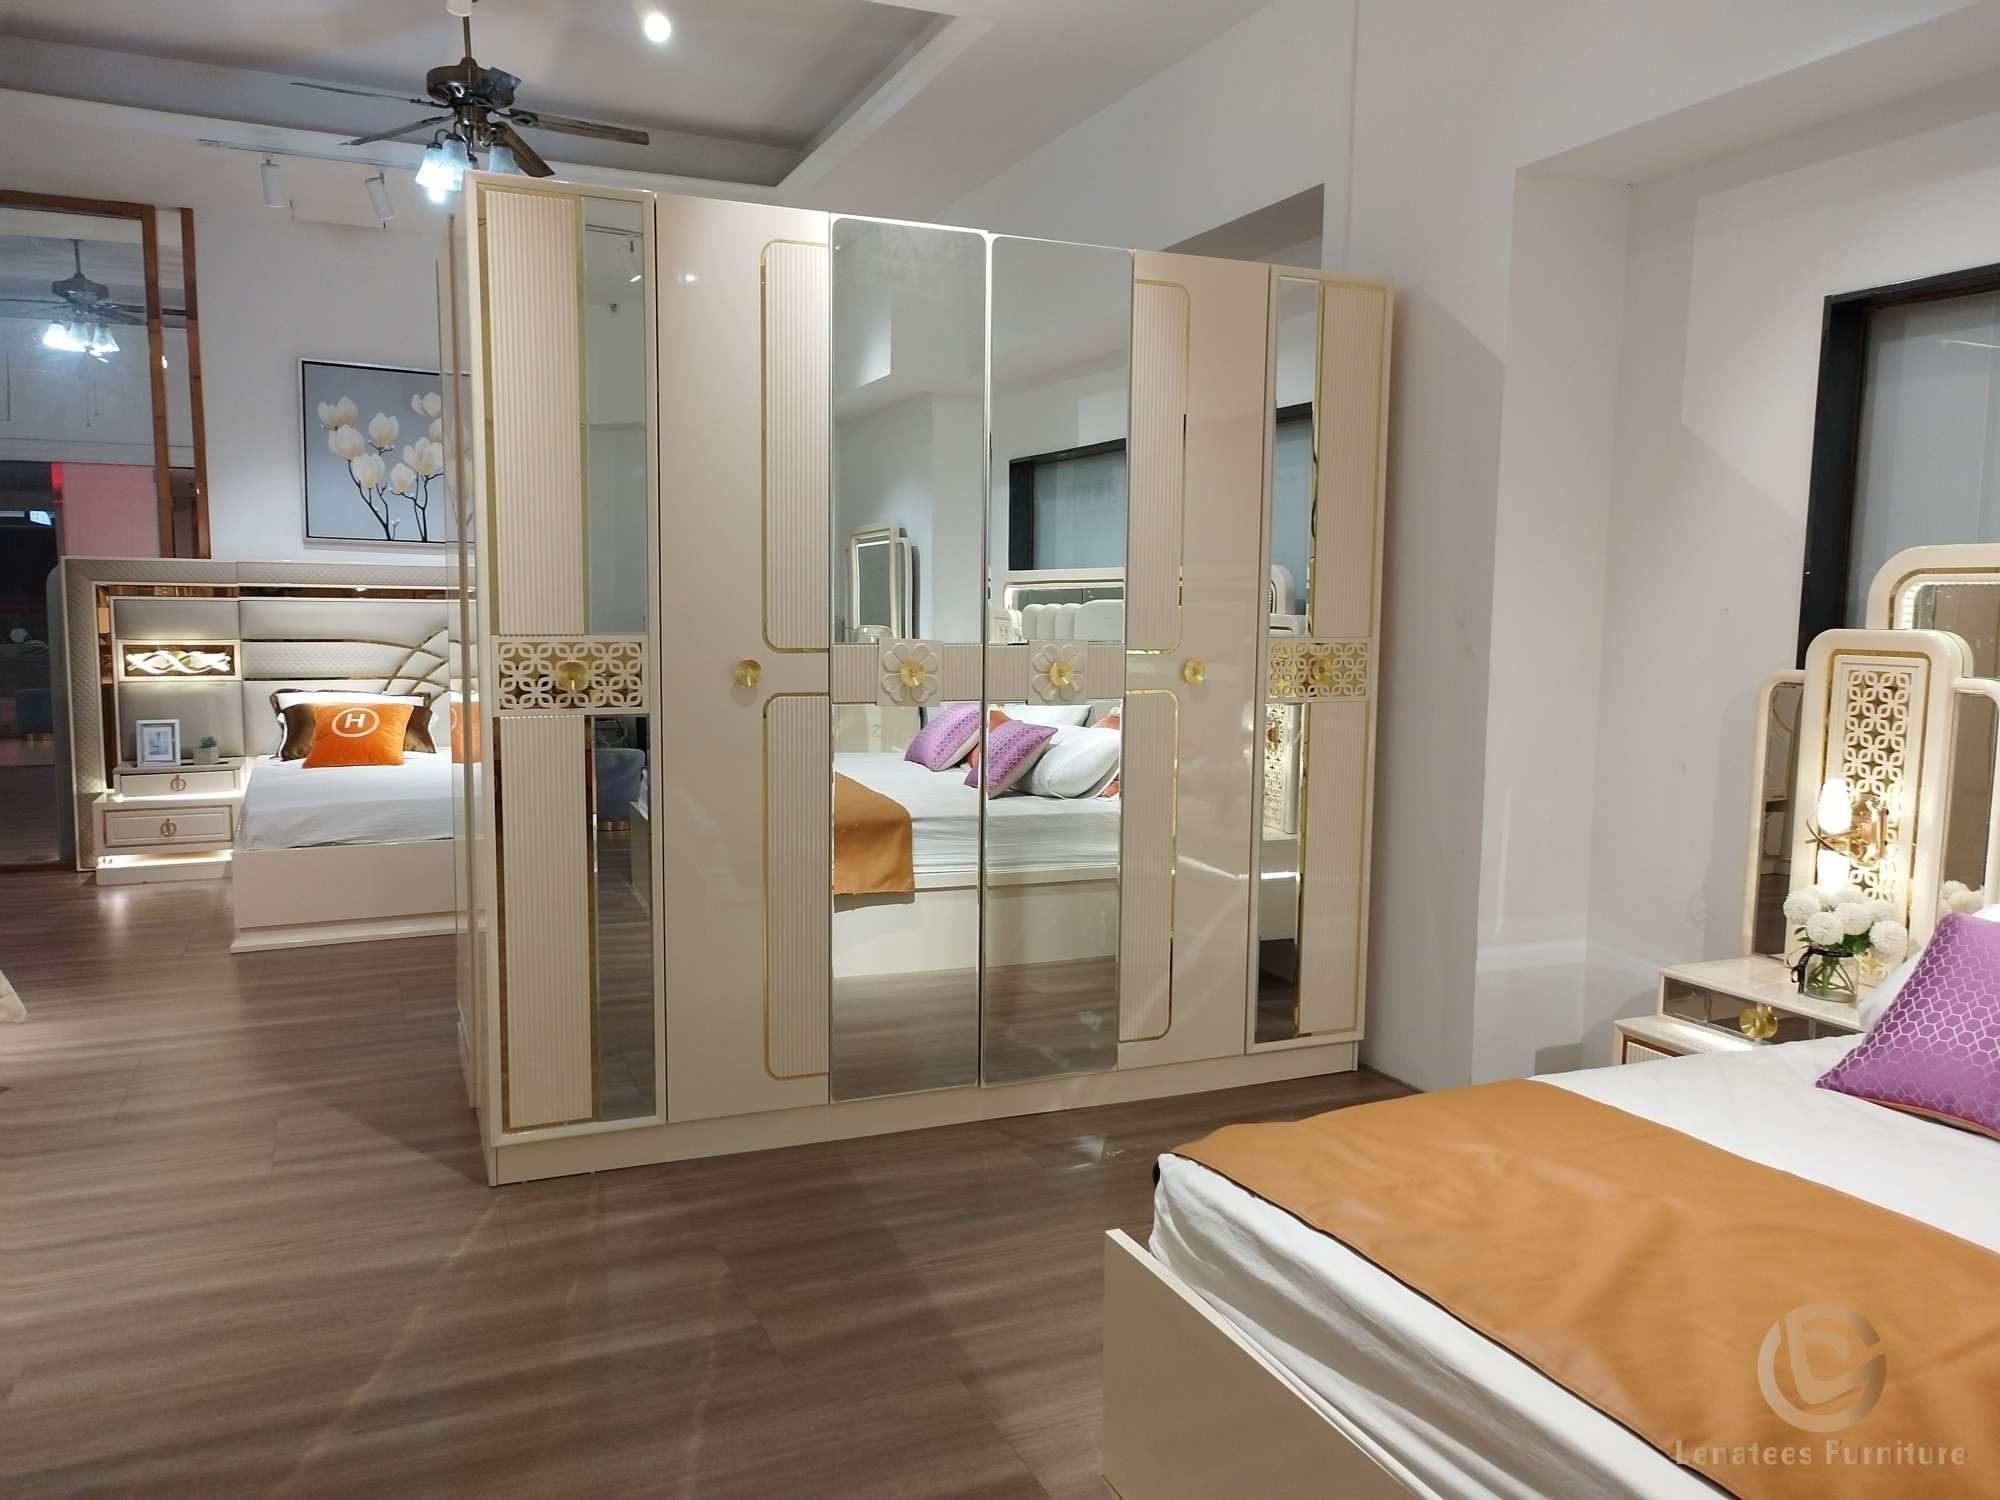 European Luxury Design High Quality Bedroom Furniture Set